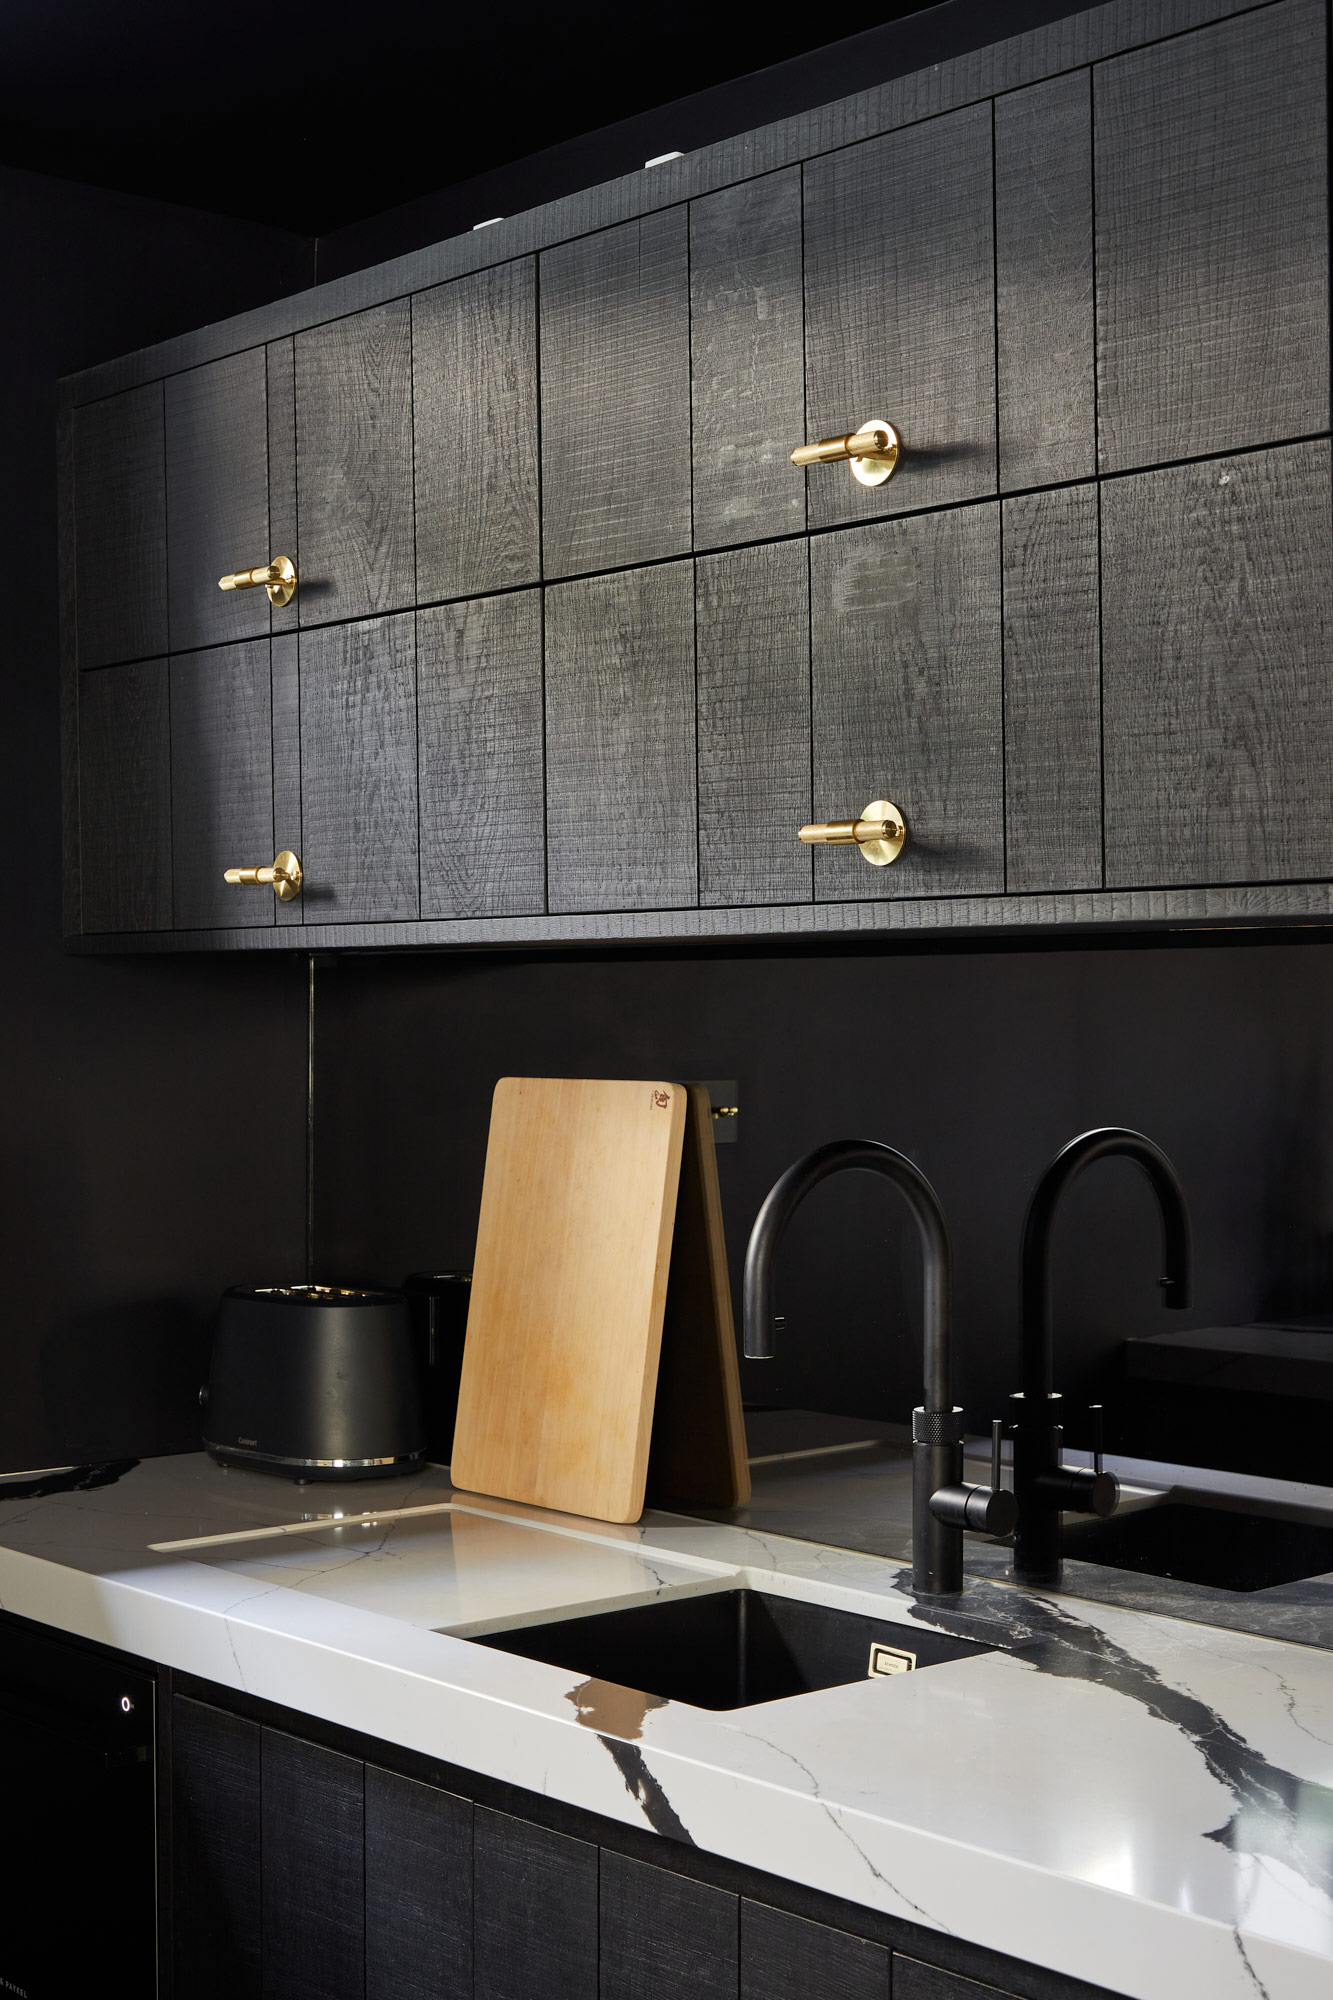 Bespoke black oak kitchen cabinets above sink